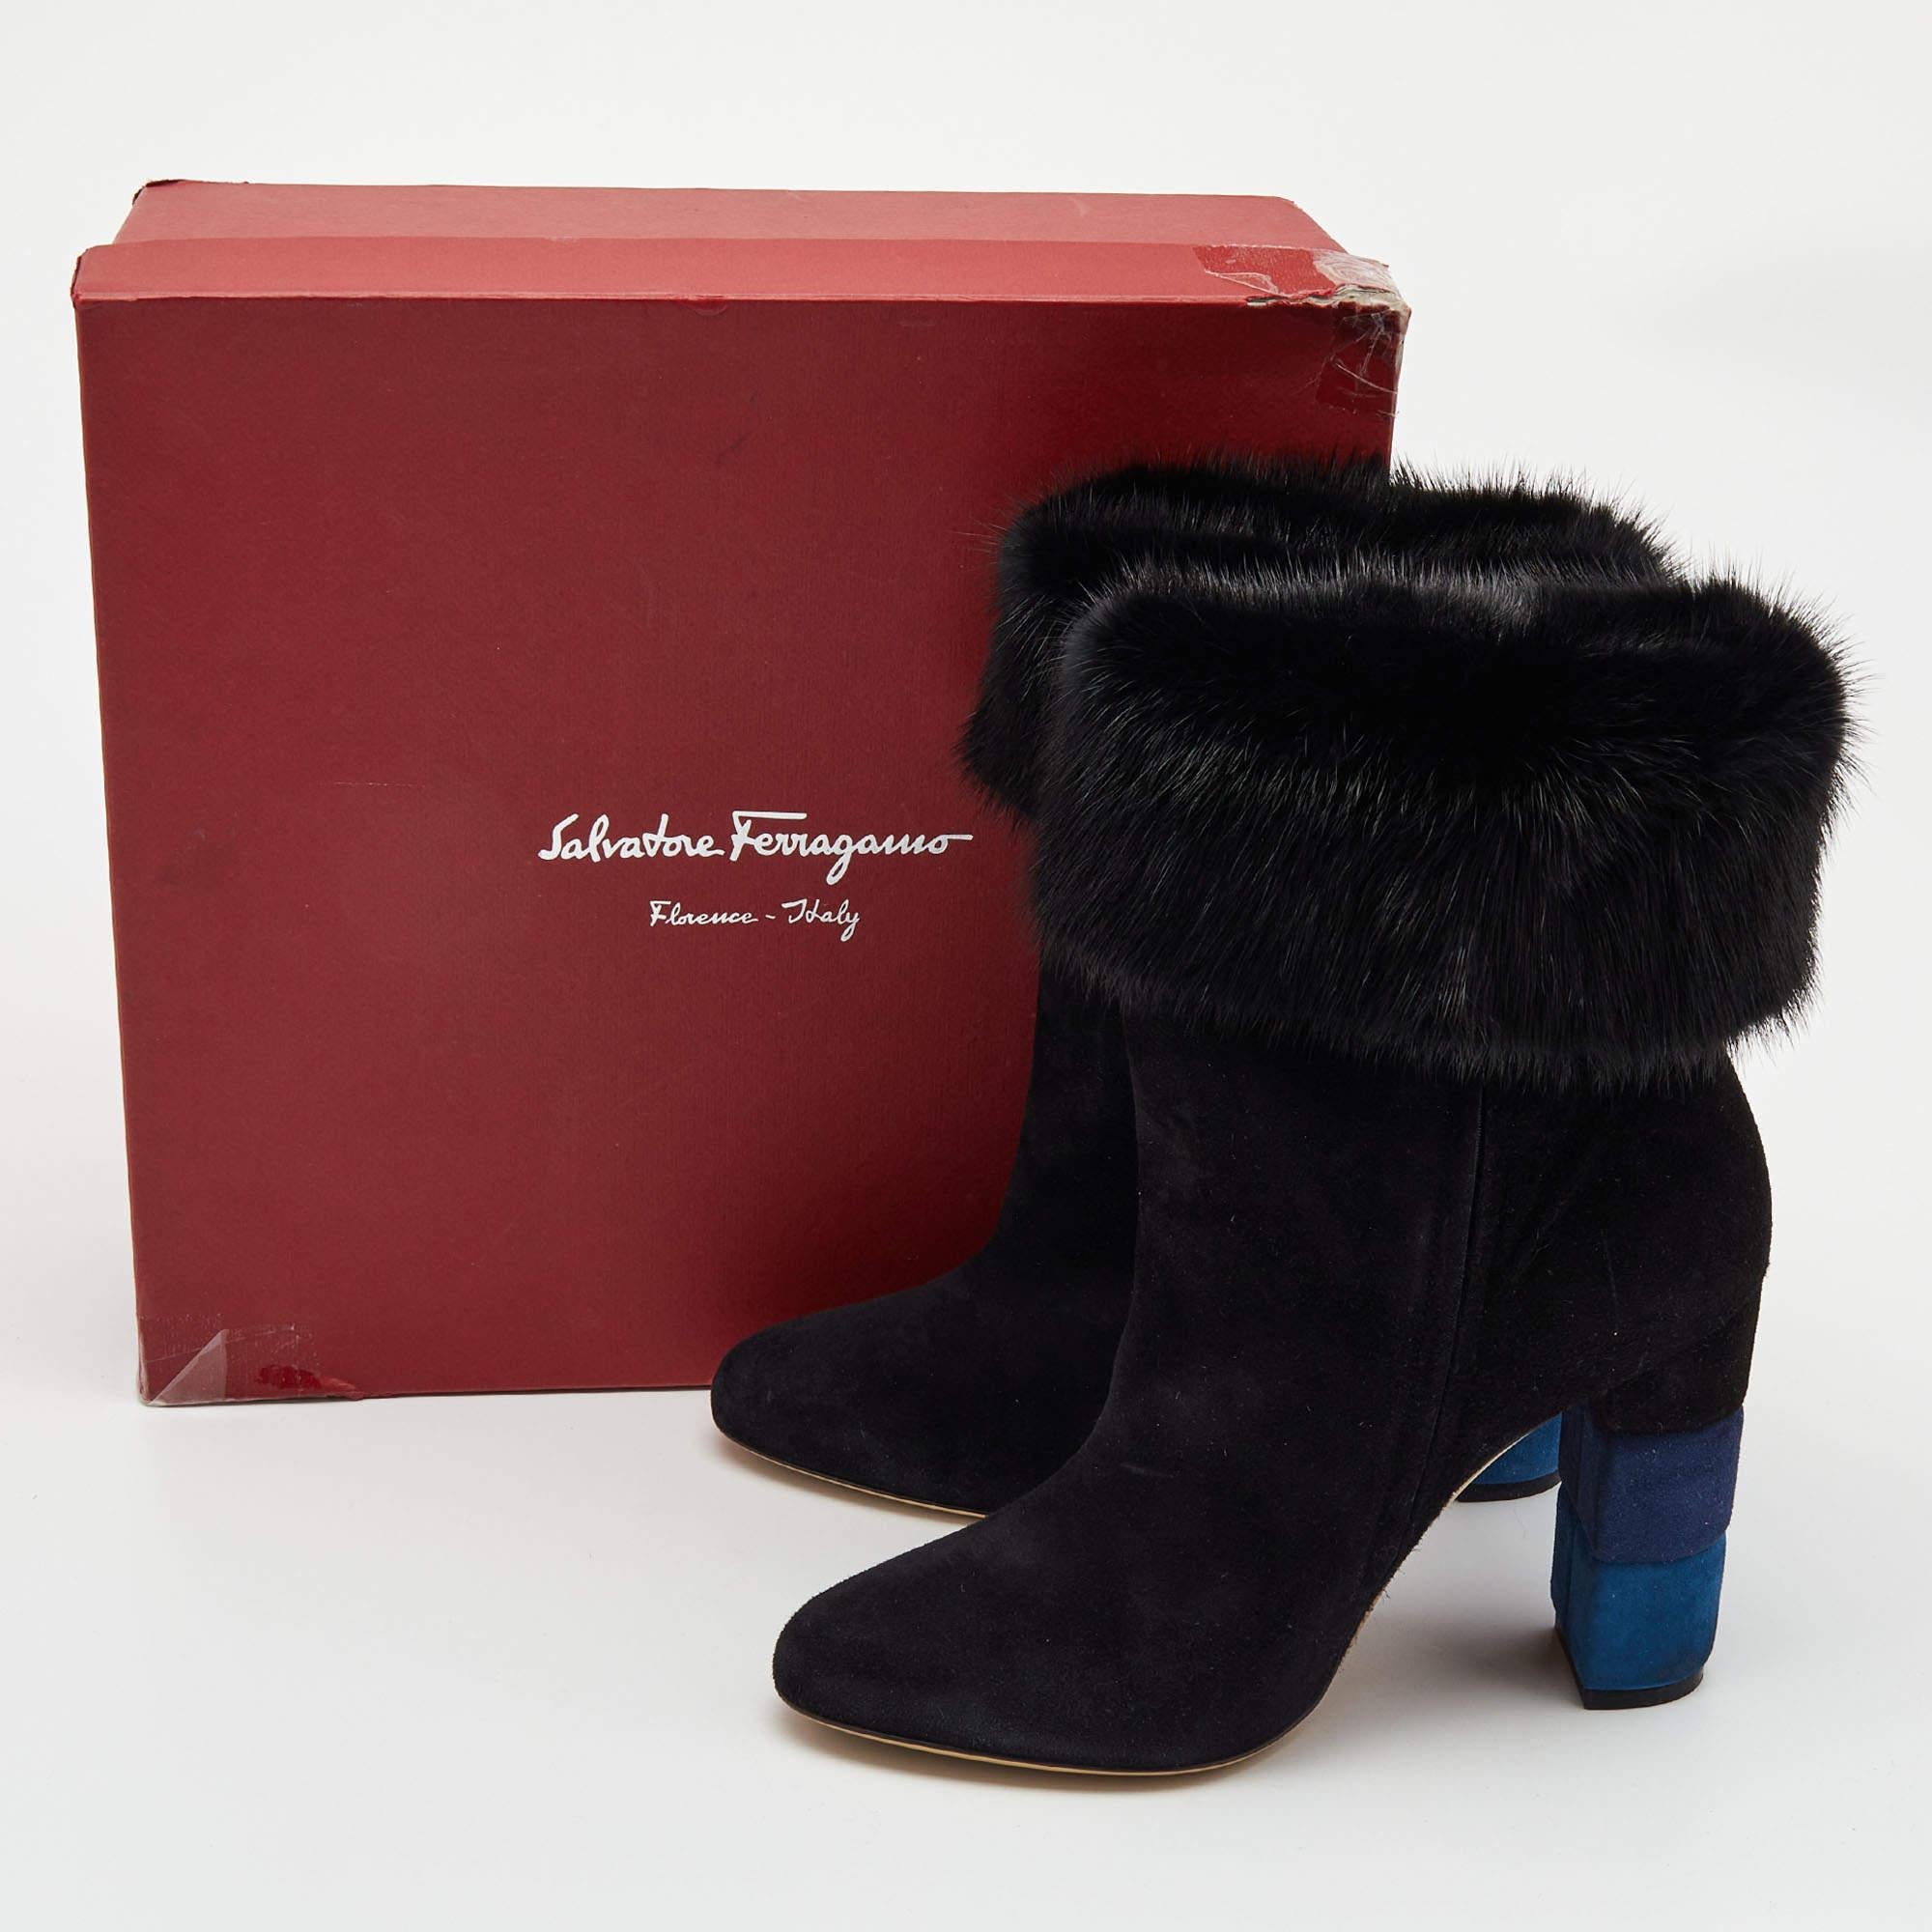 Salvatore Ferragamo Black Suede and Fur Loris Ankle Boots Size 40 2